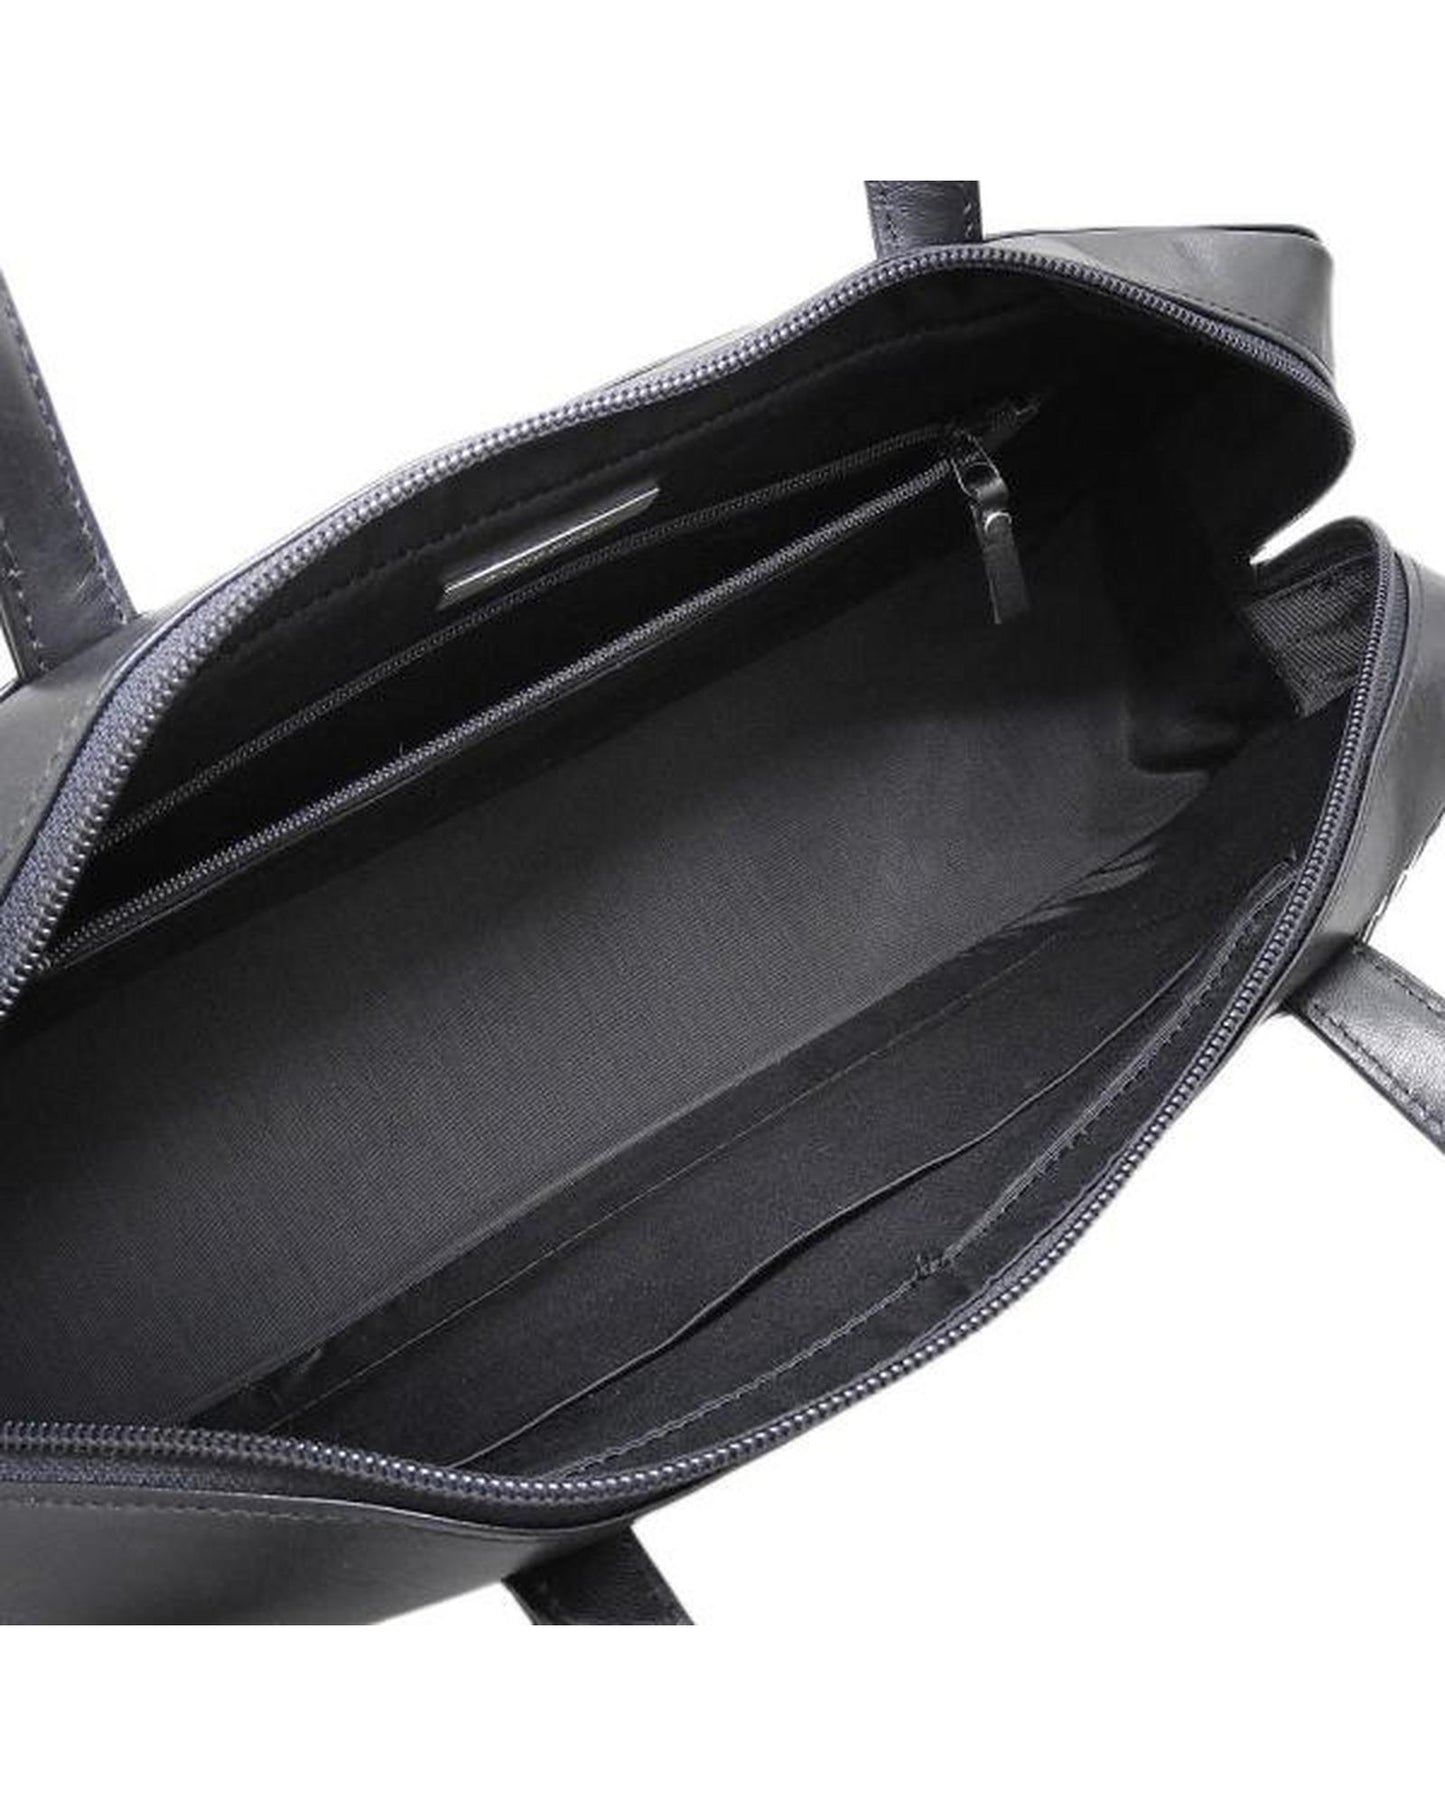 Burberry Women's Leather Check Handbag in Black in Black